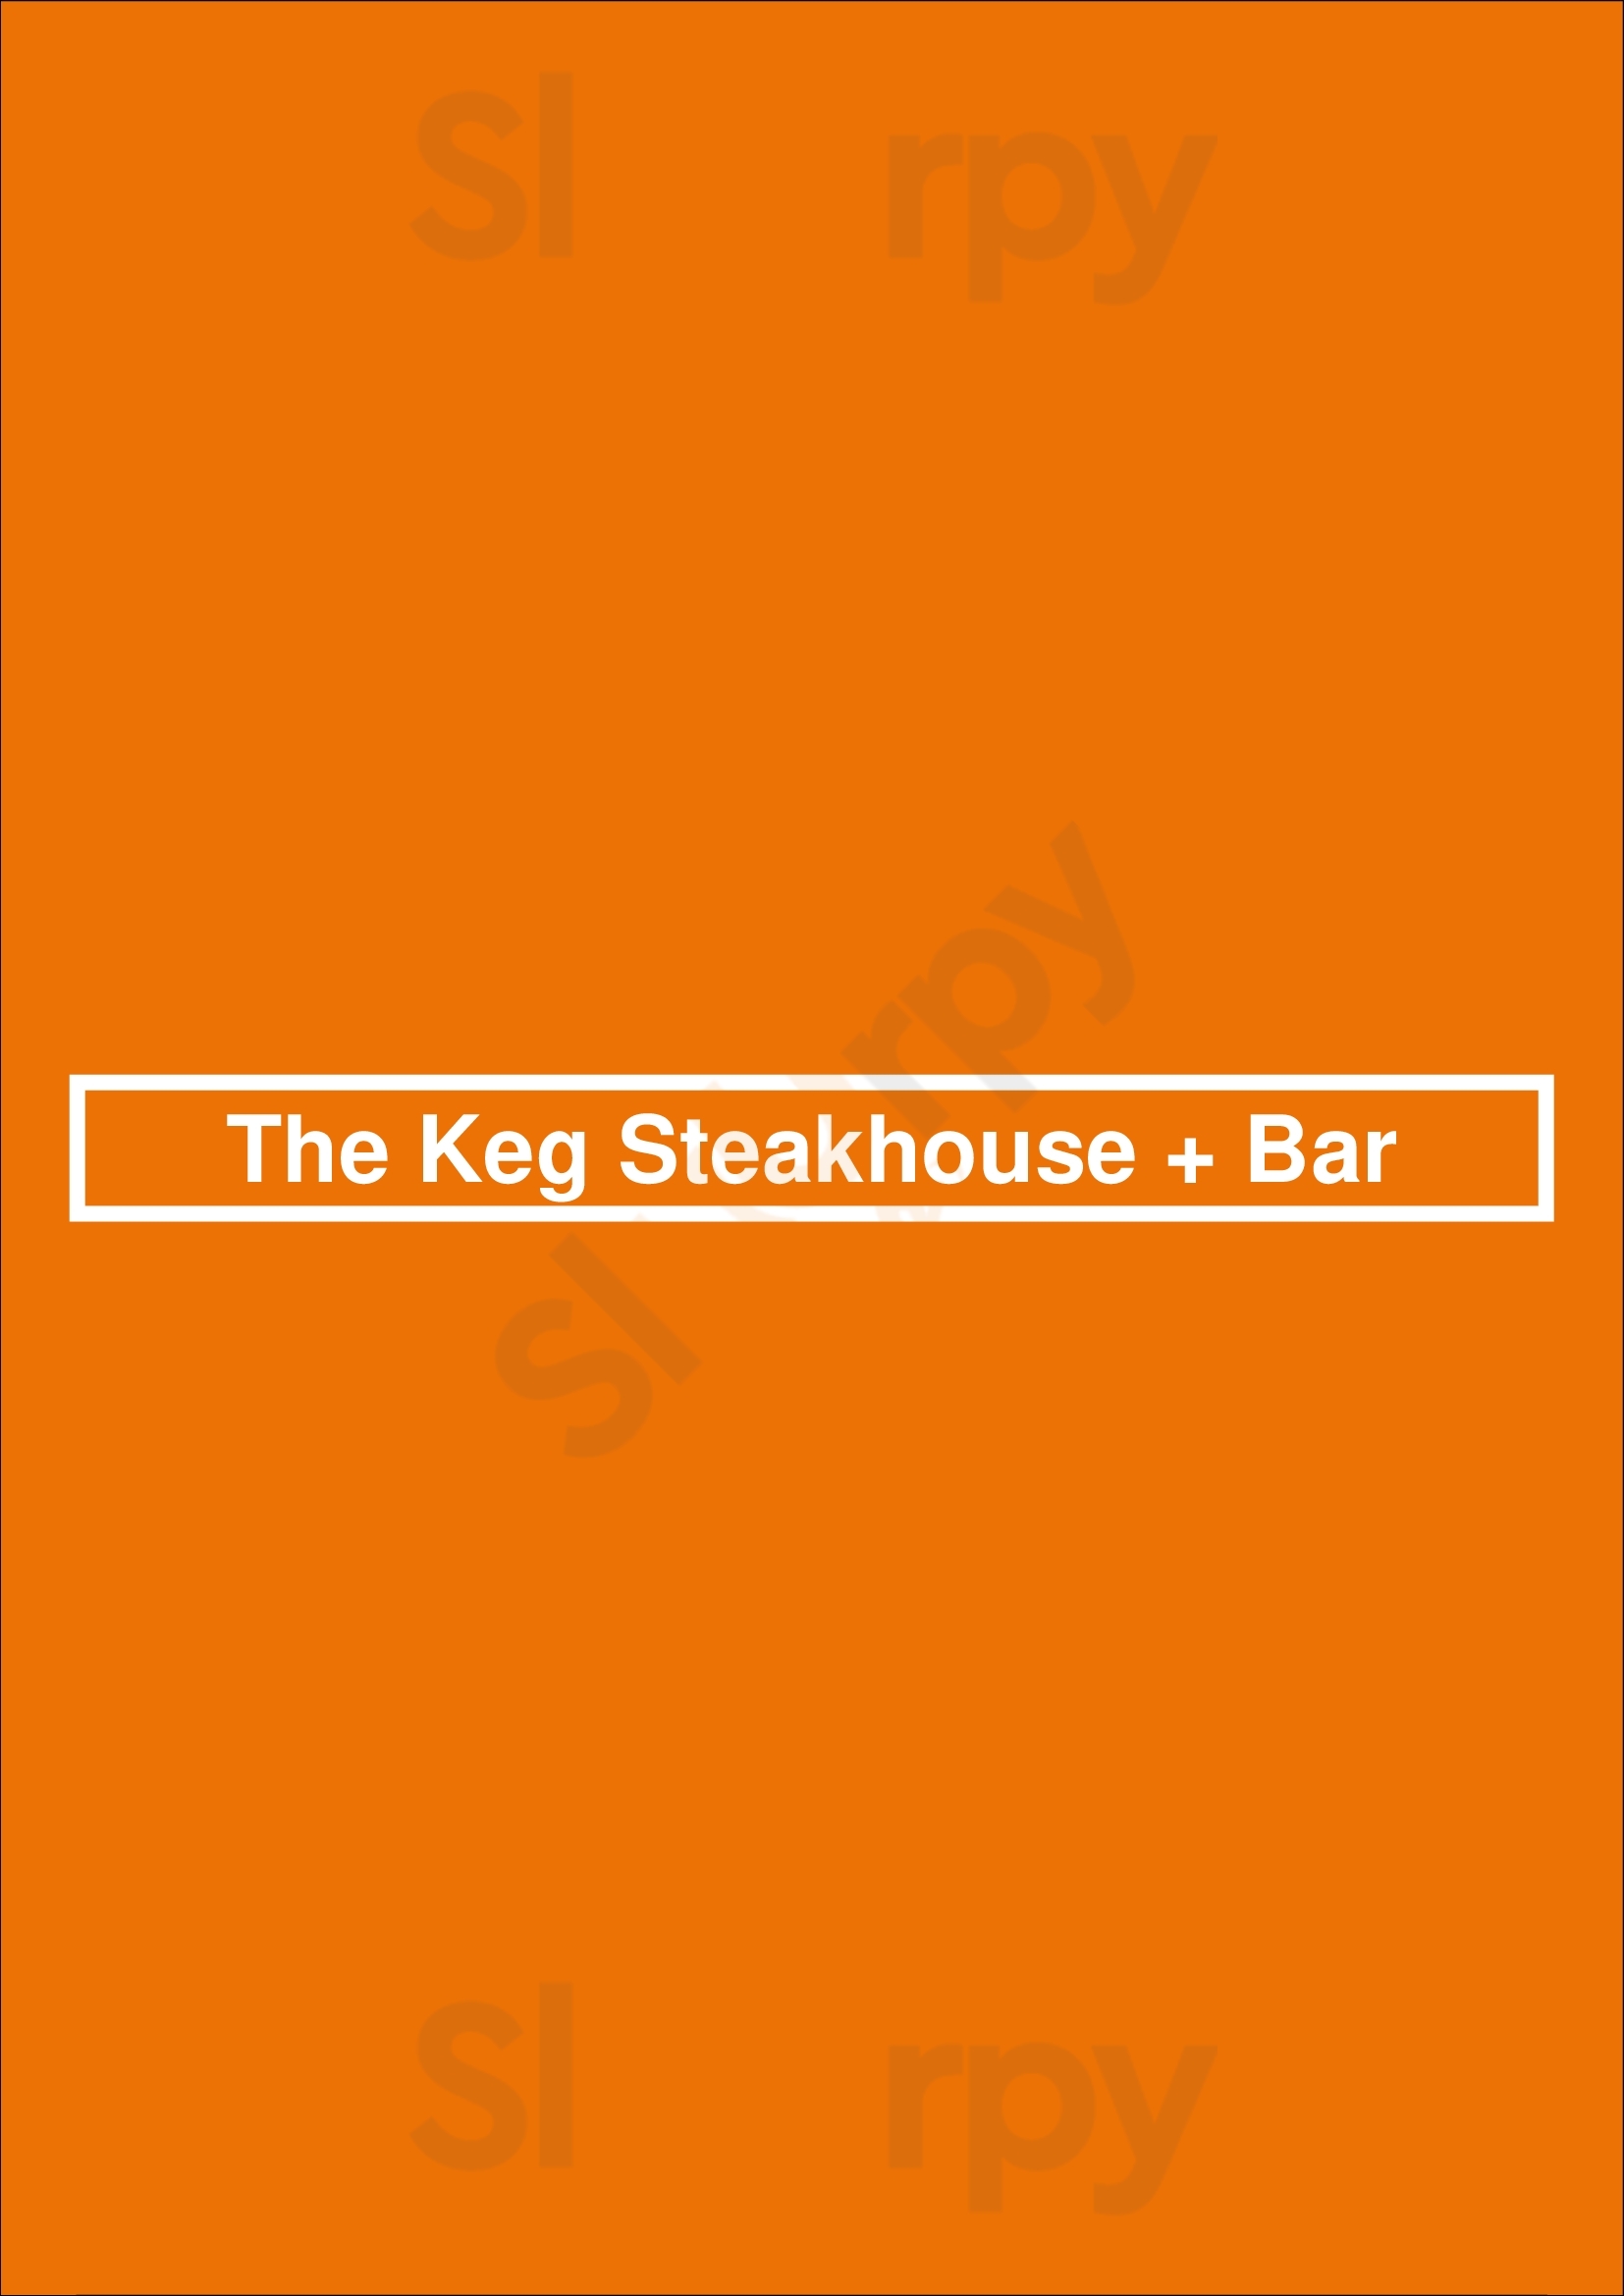 The Keg Steakhouse + Bar - Windermere Edmonton Menu - 1